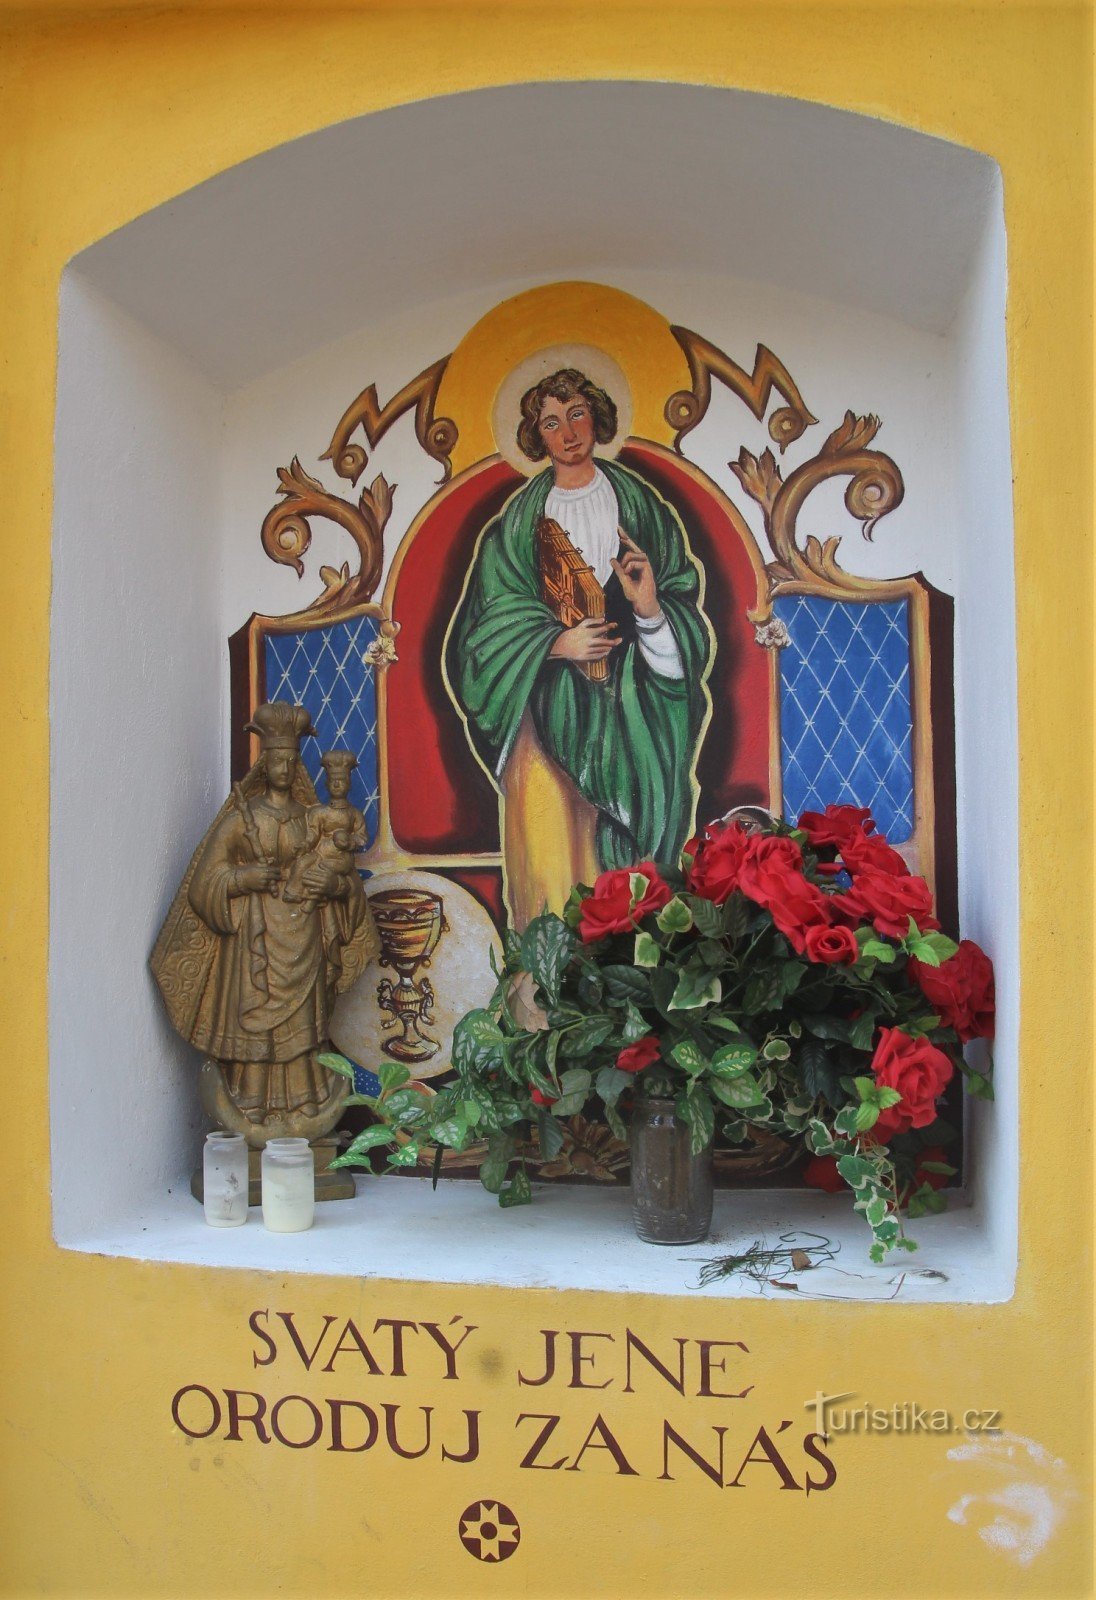 Motiv St. Johannes i kapellets nisch